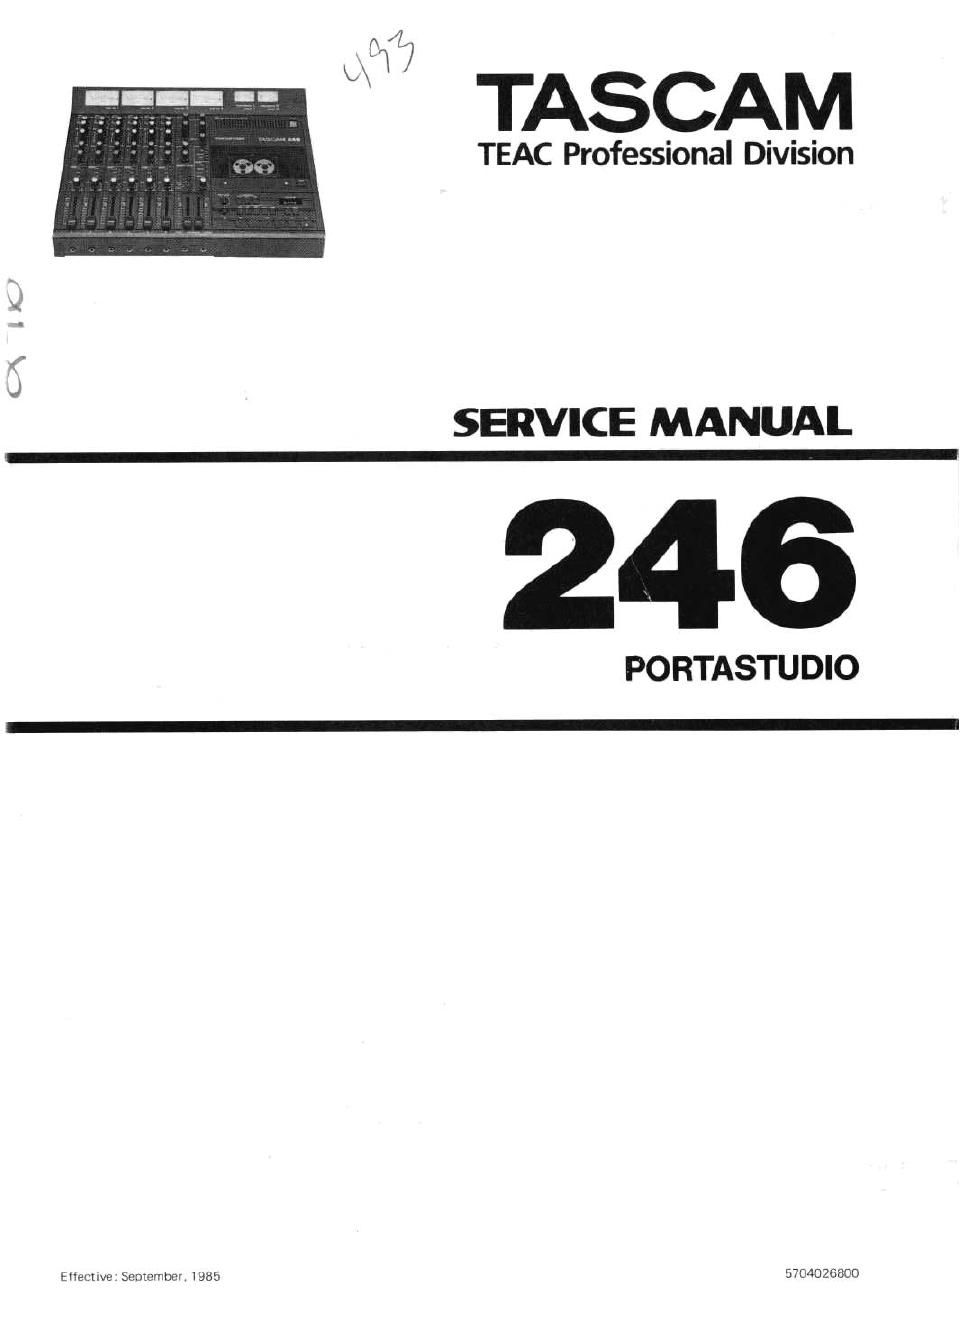 Tascam 246 Portastudio Service Manual